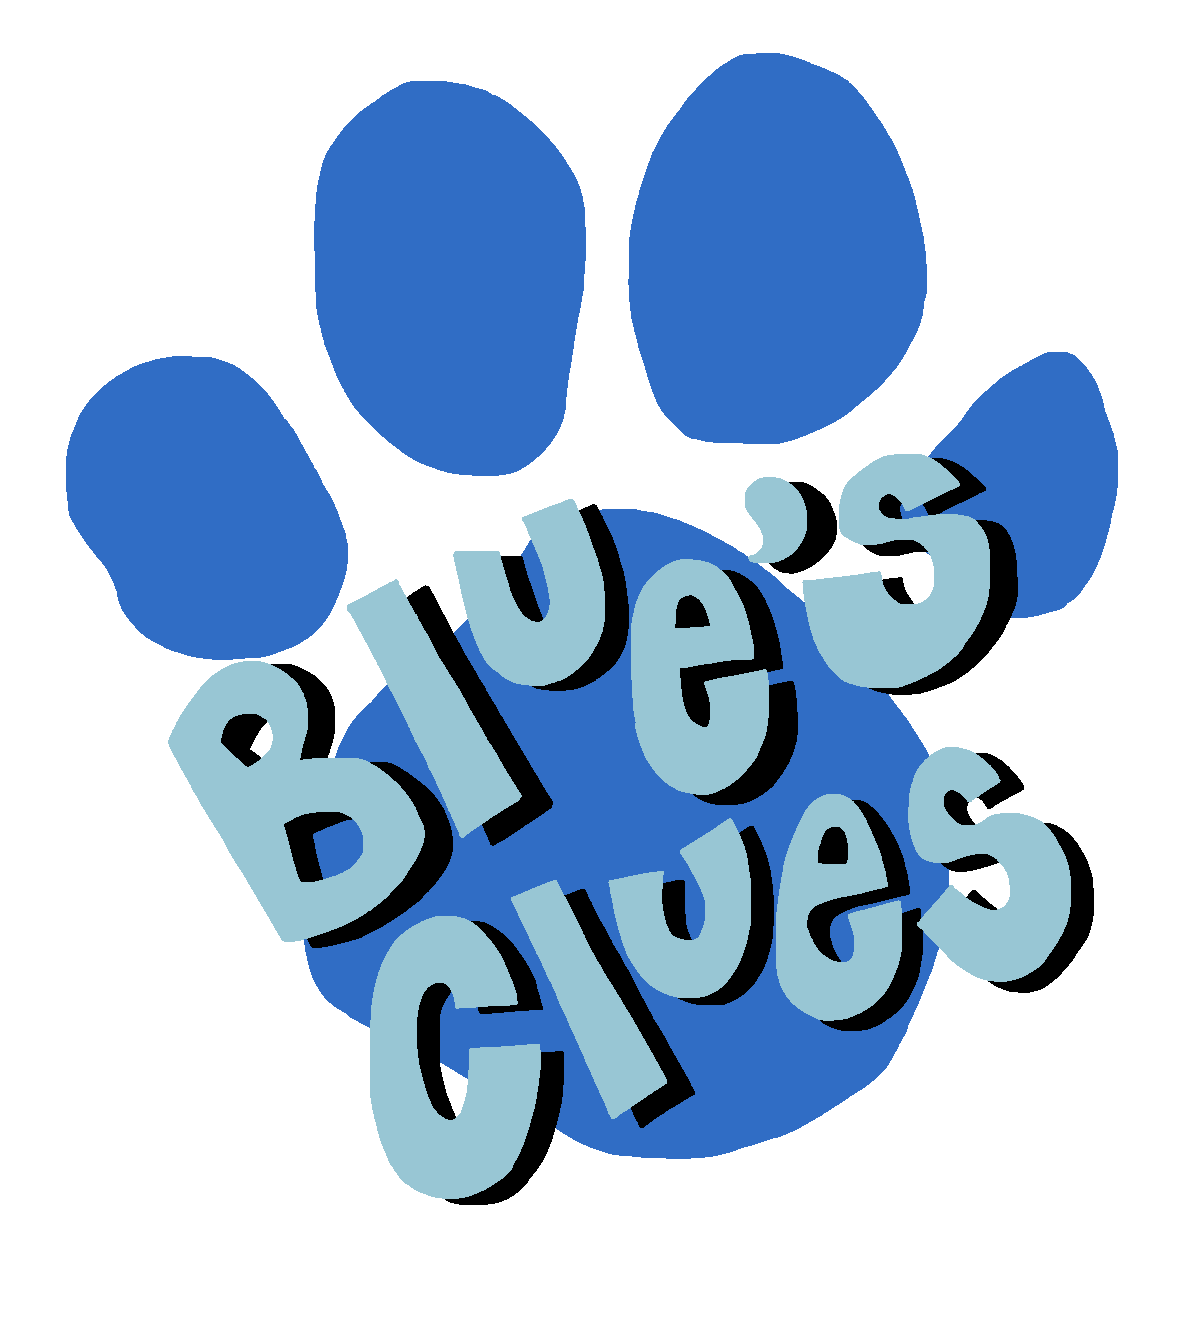 Blues Clues